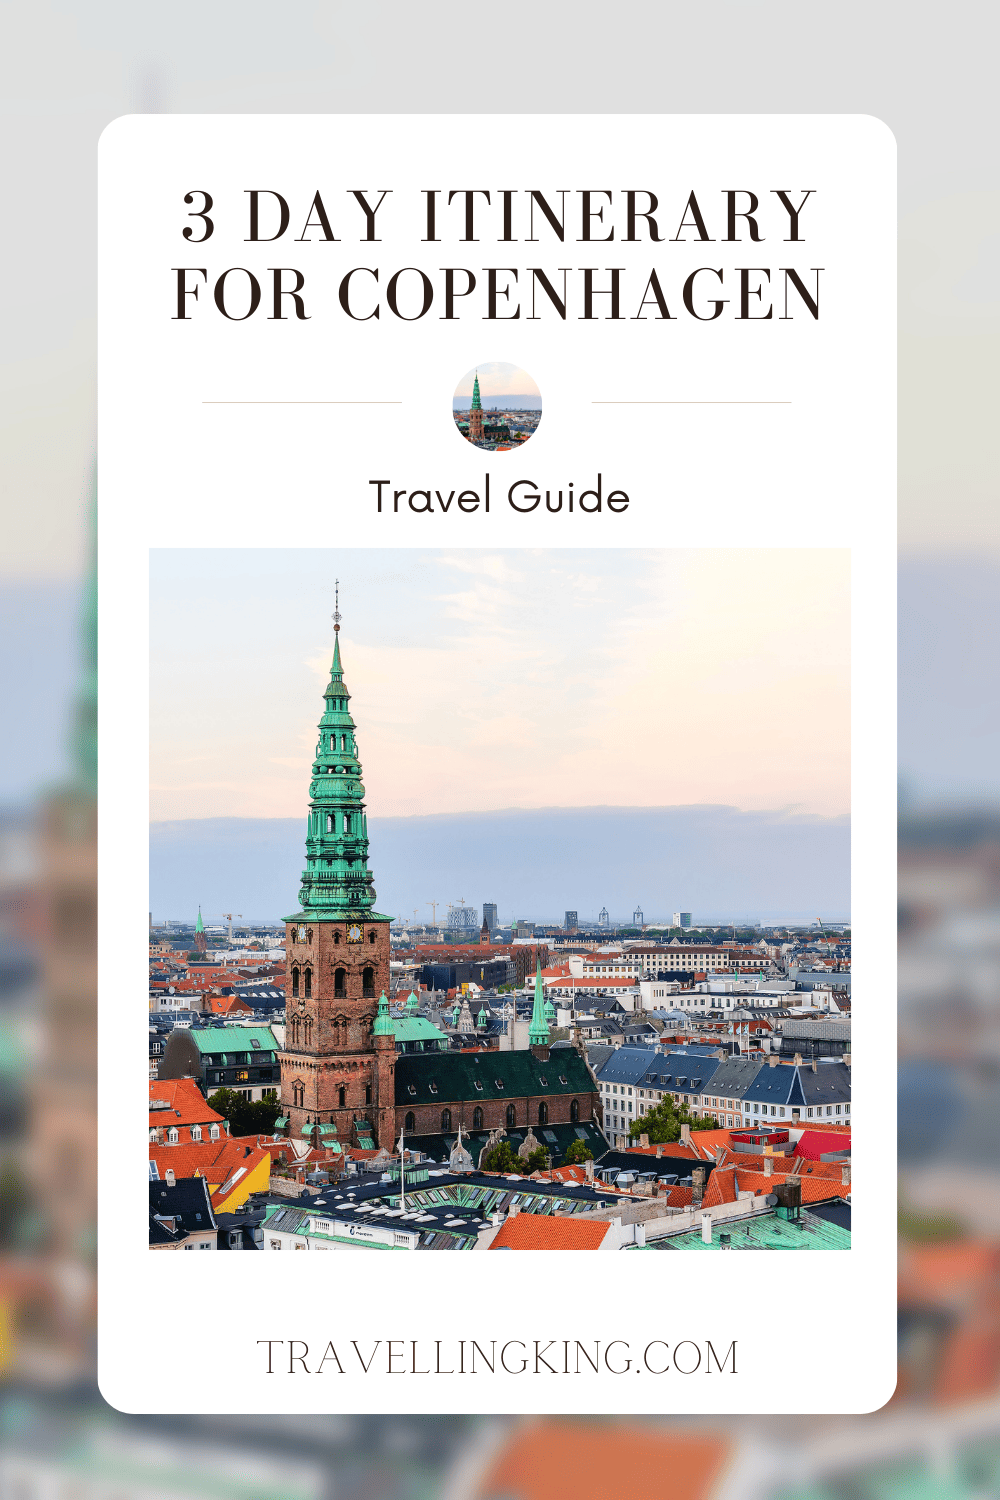 3 Day Itinerary for Copenhagen